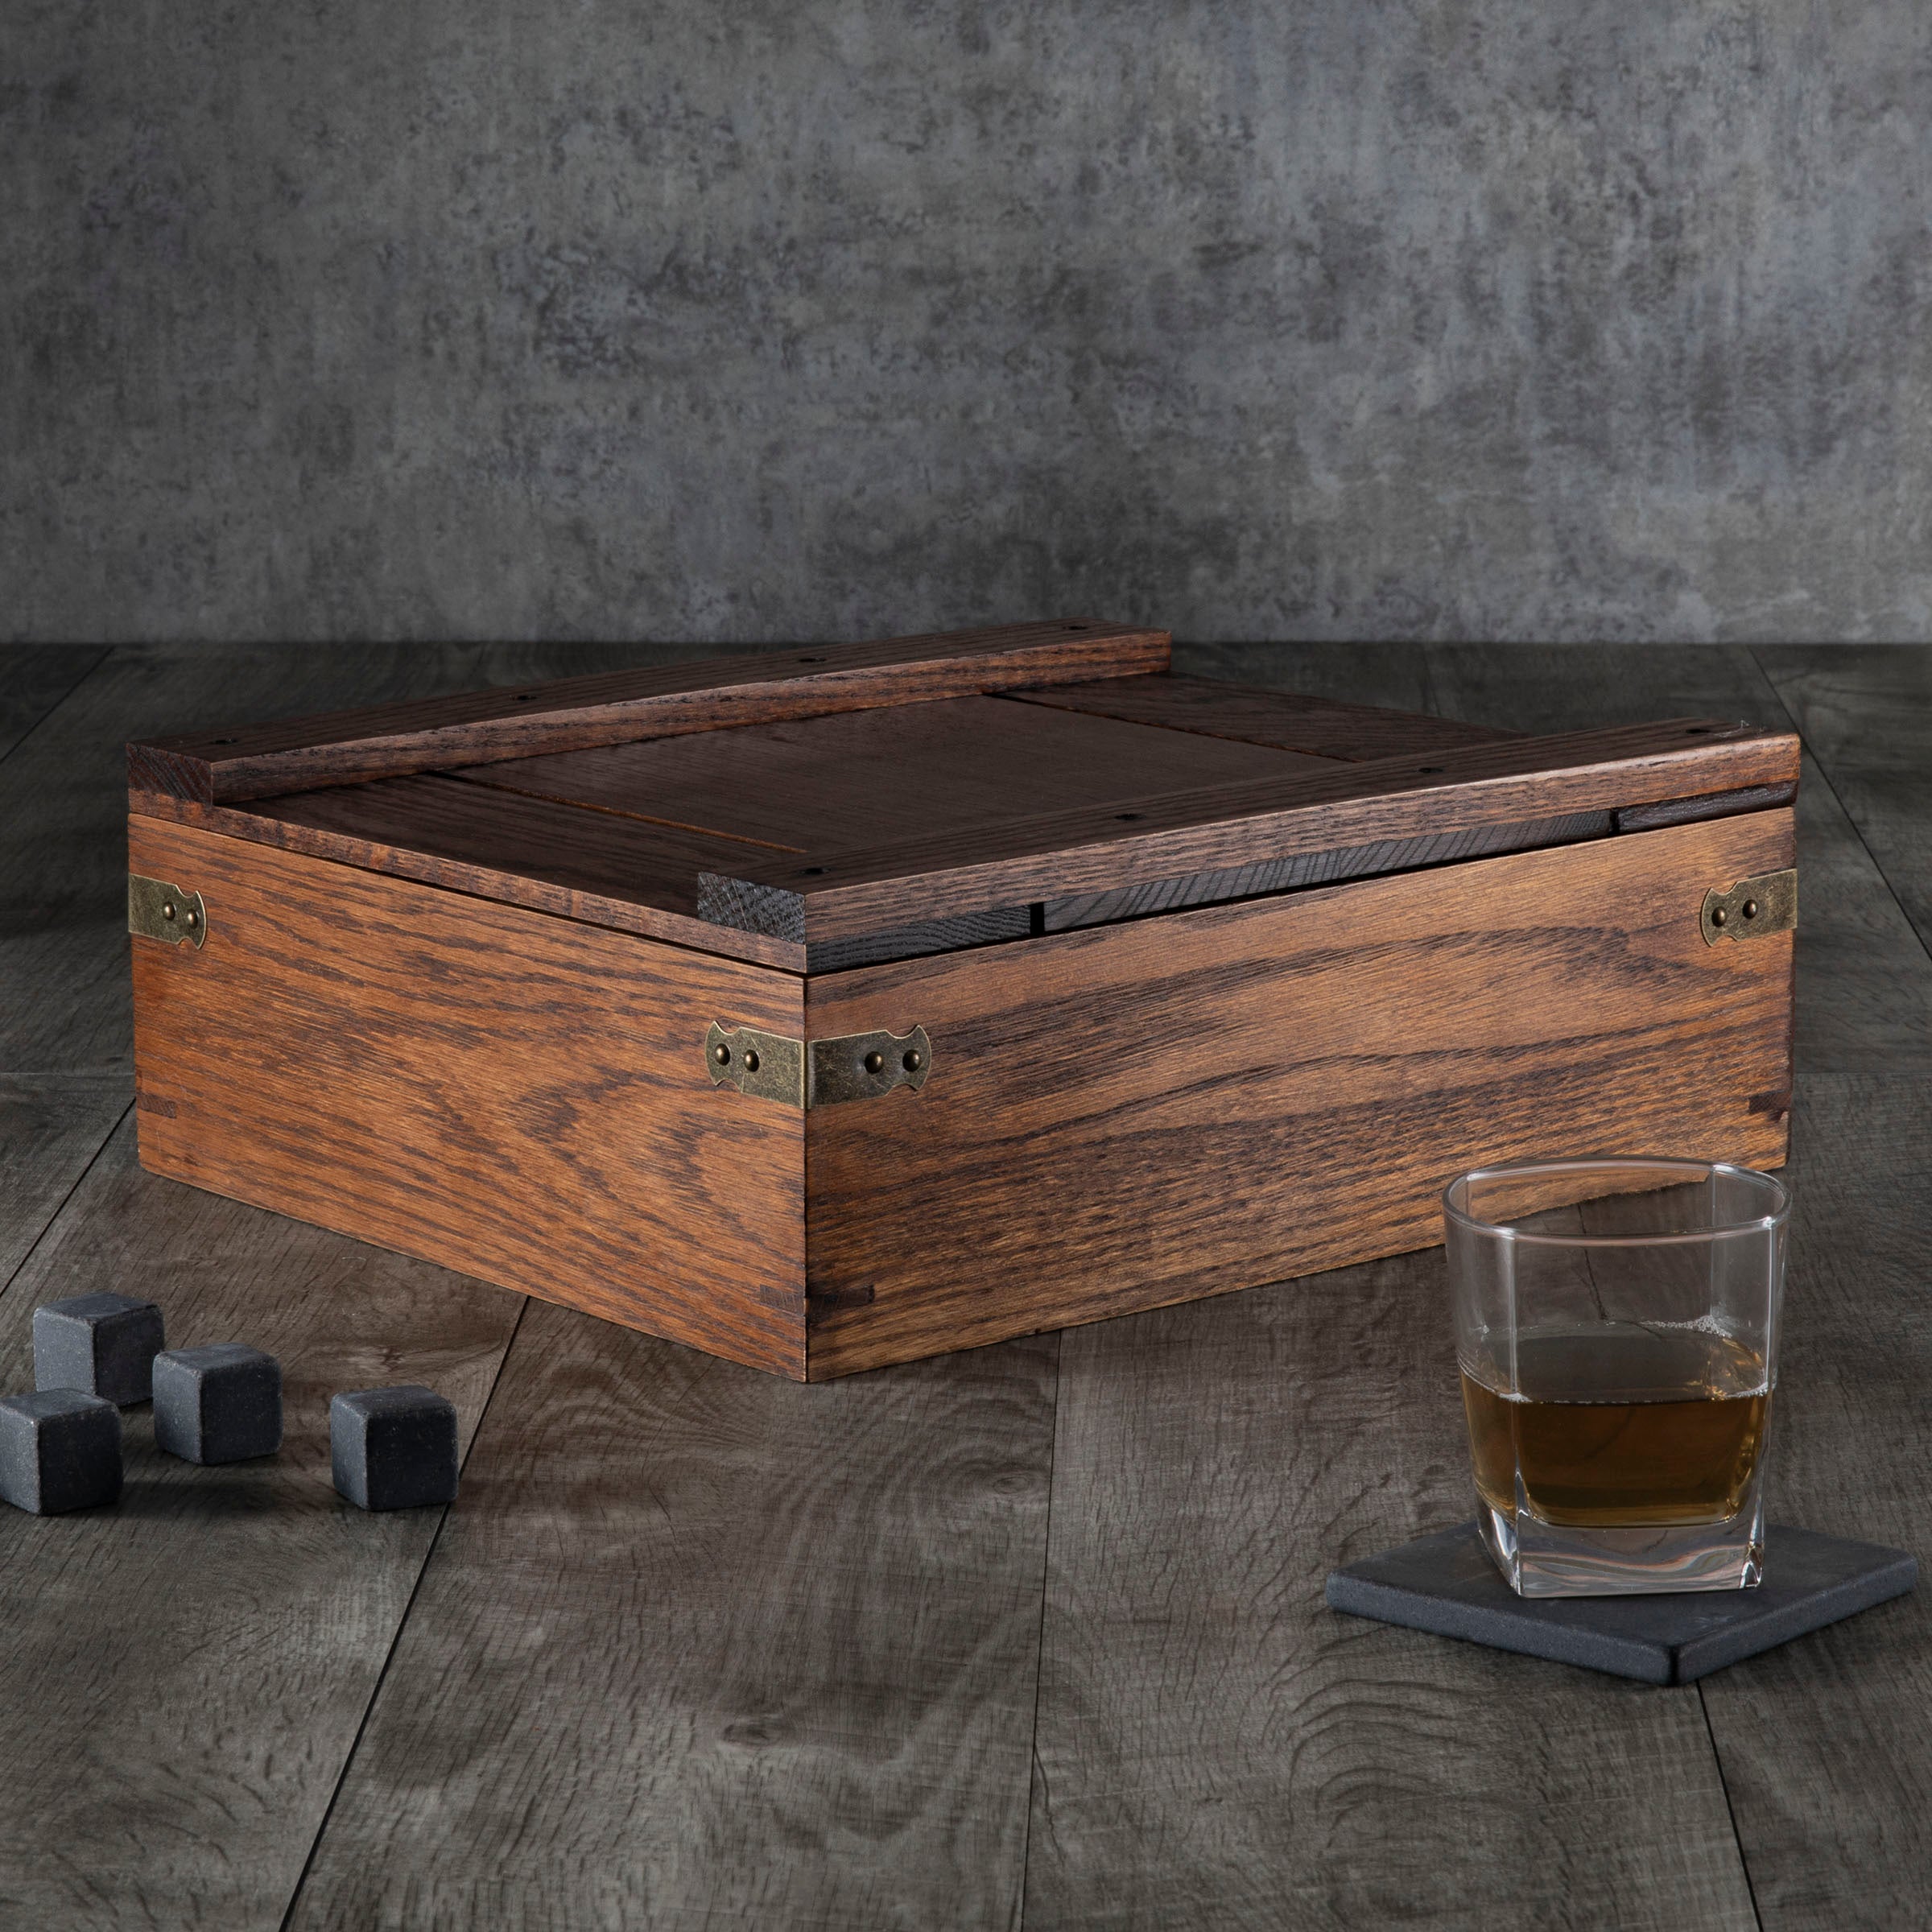 LSU Tigers - Whiskey Box Gift Set